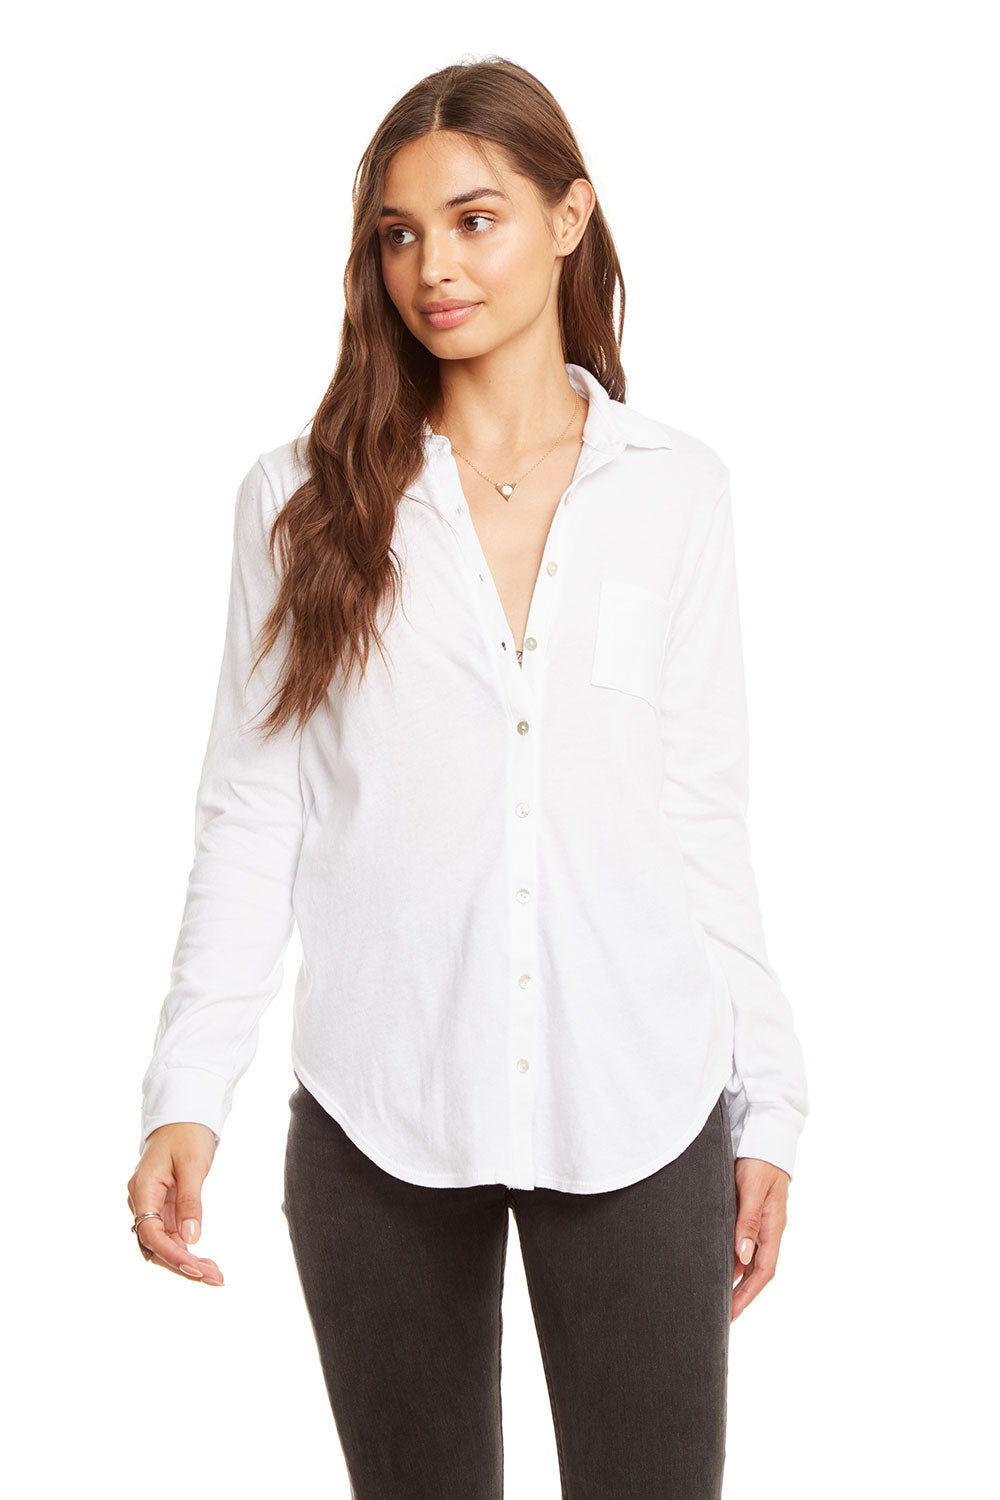 Gauzy Cotton L/S Button Down Shirt W/ Pocket - chaserbrand.com